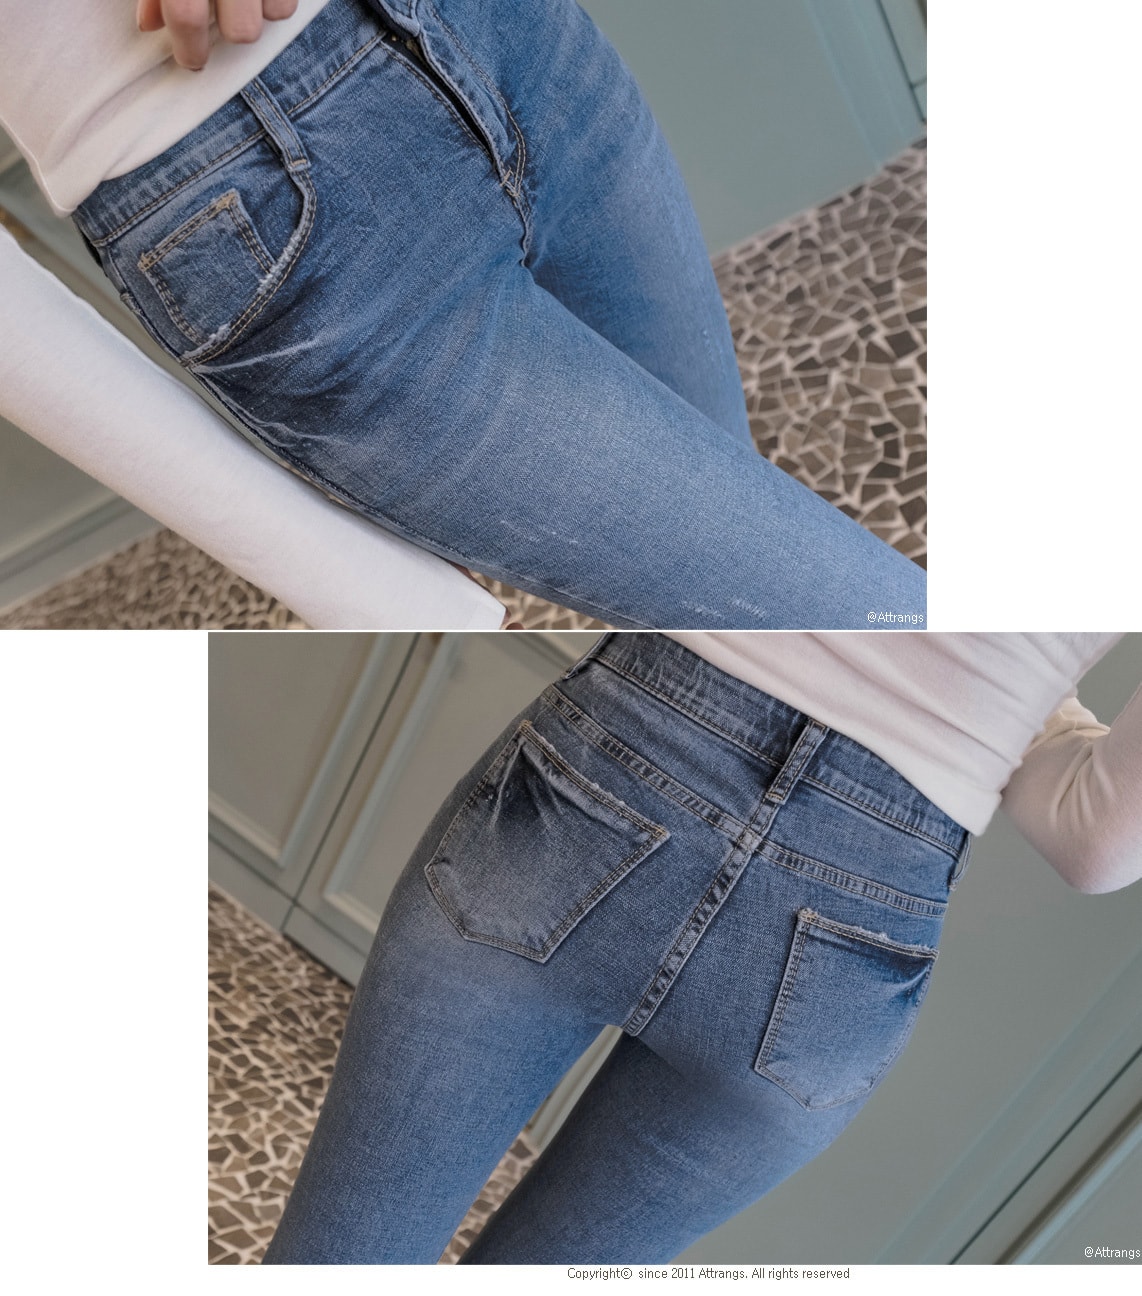 jeans Blue(model) L